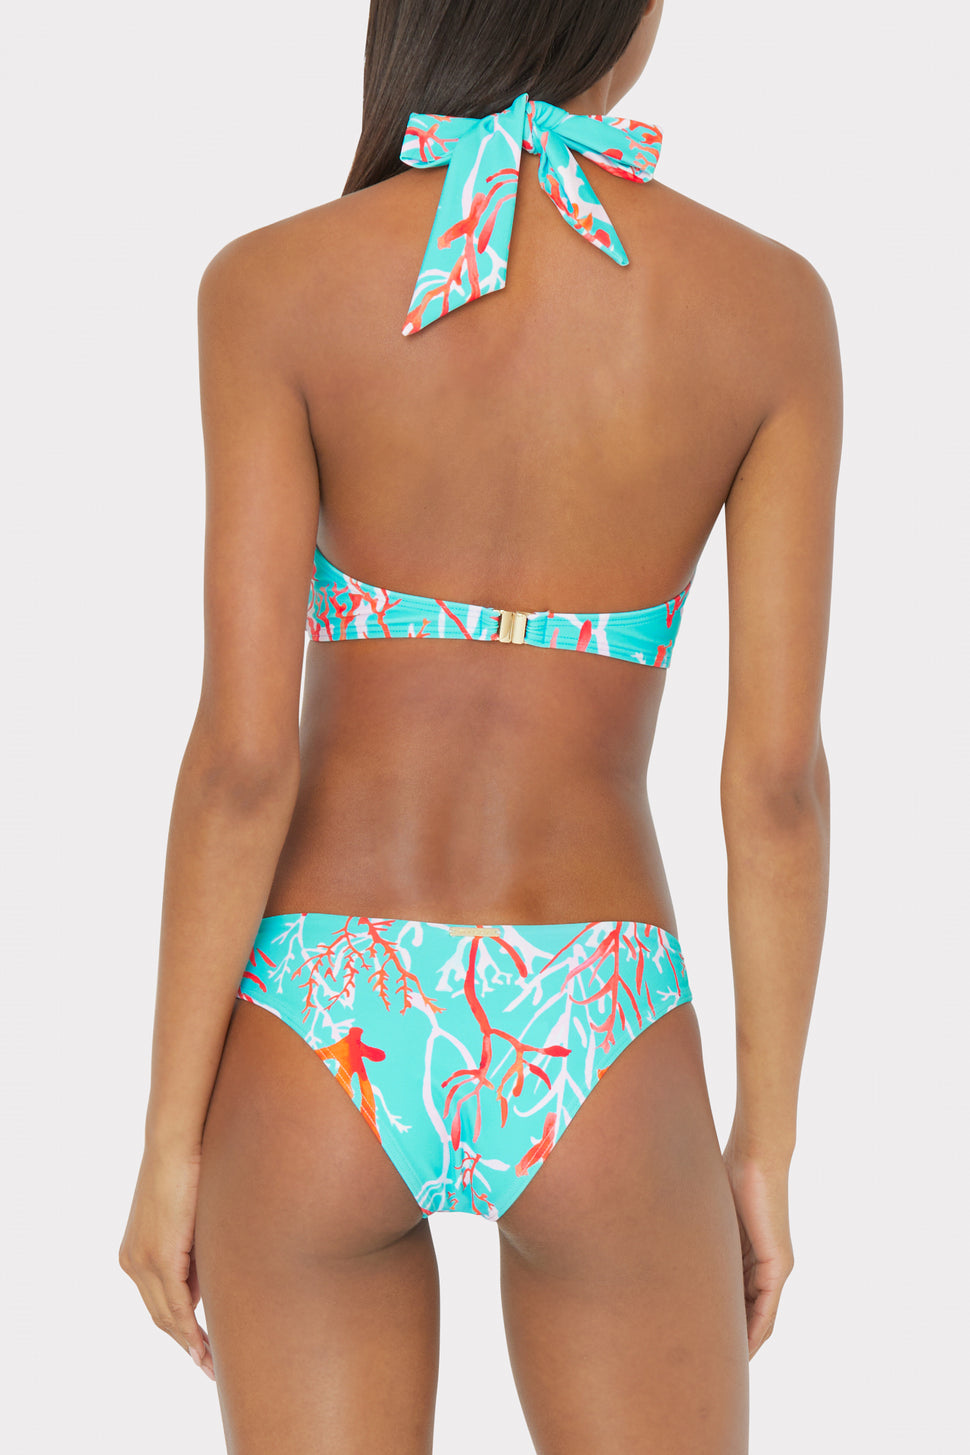 Marina bikini bottom tanga - Floral aqua